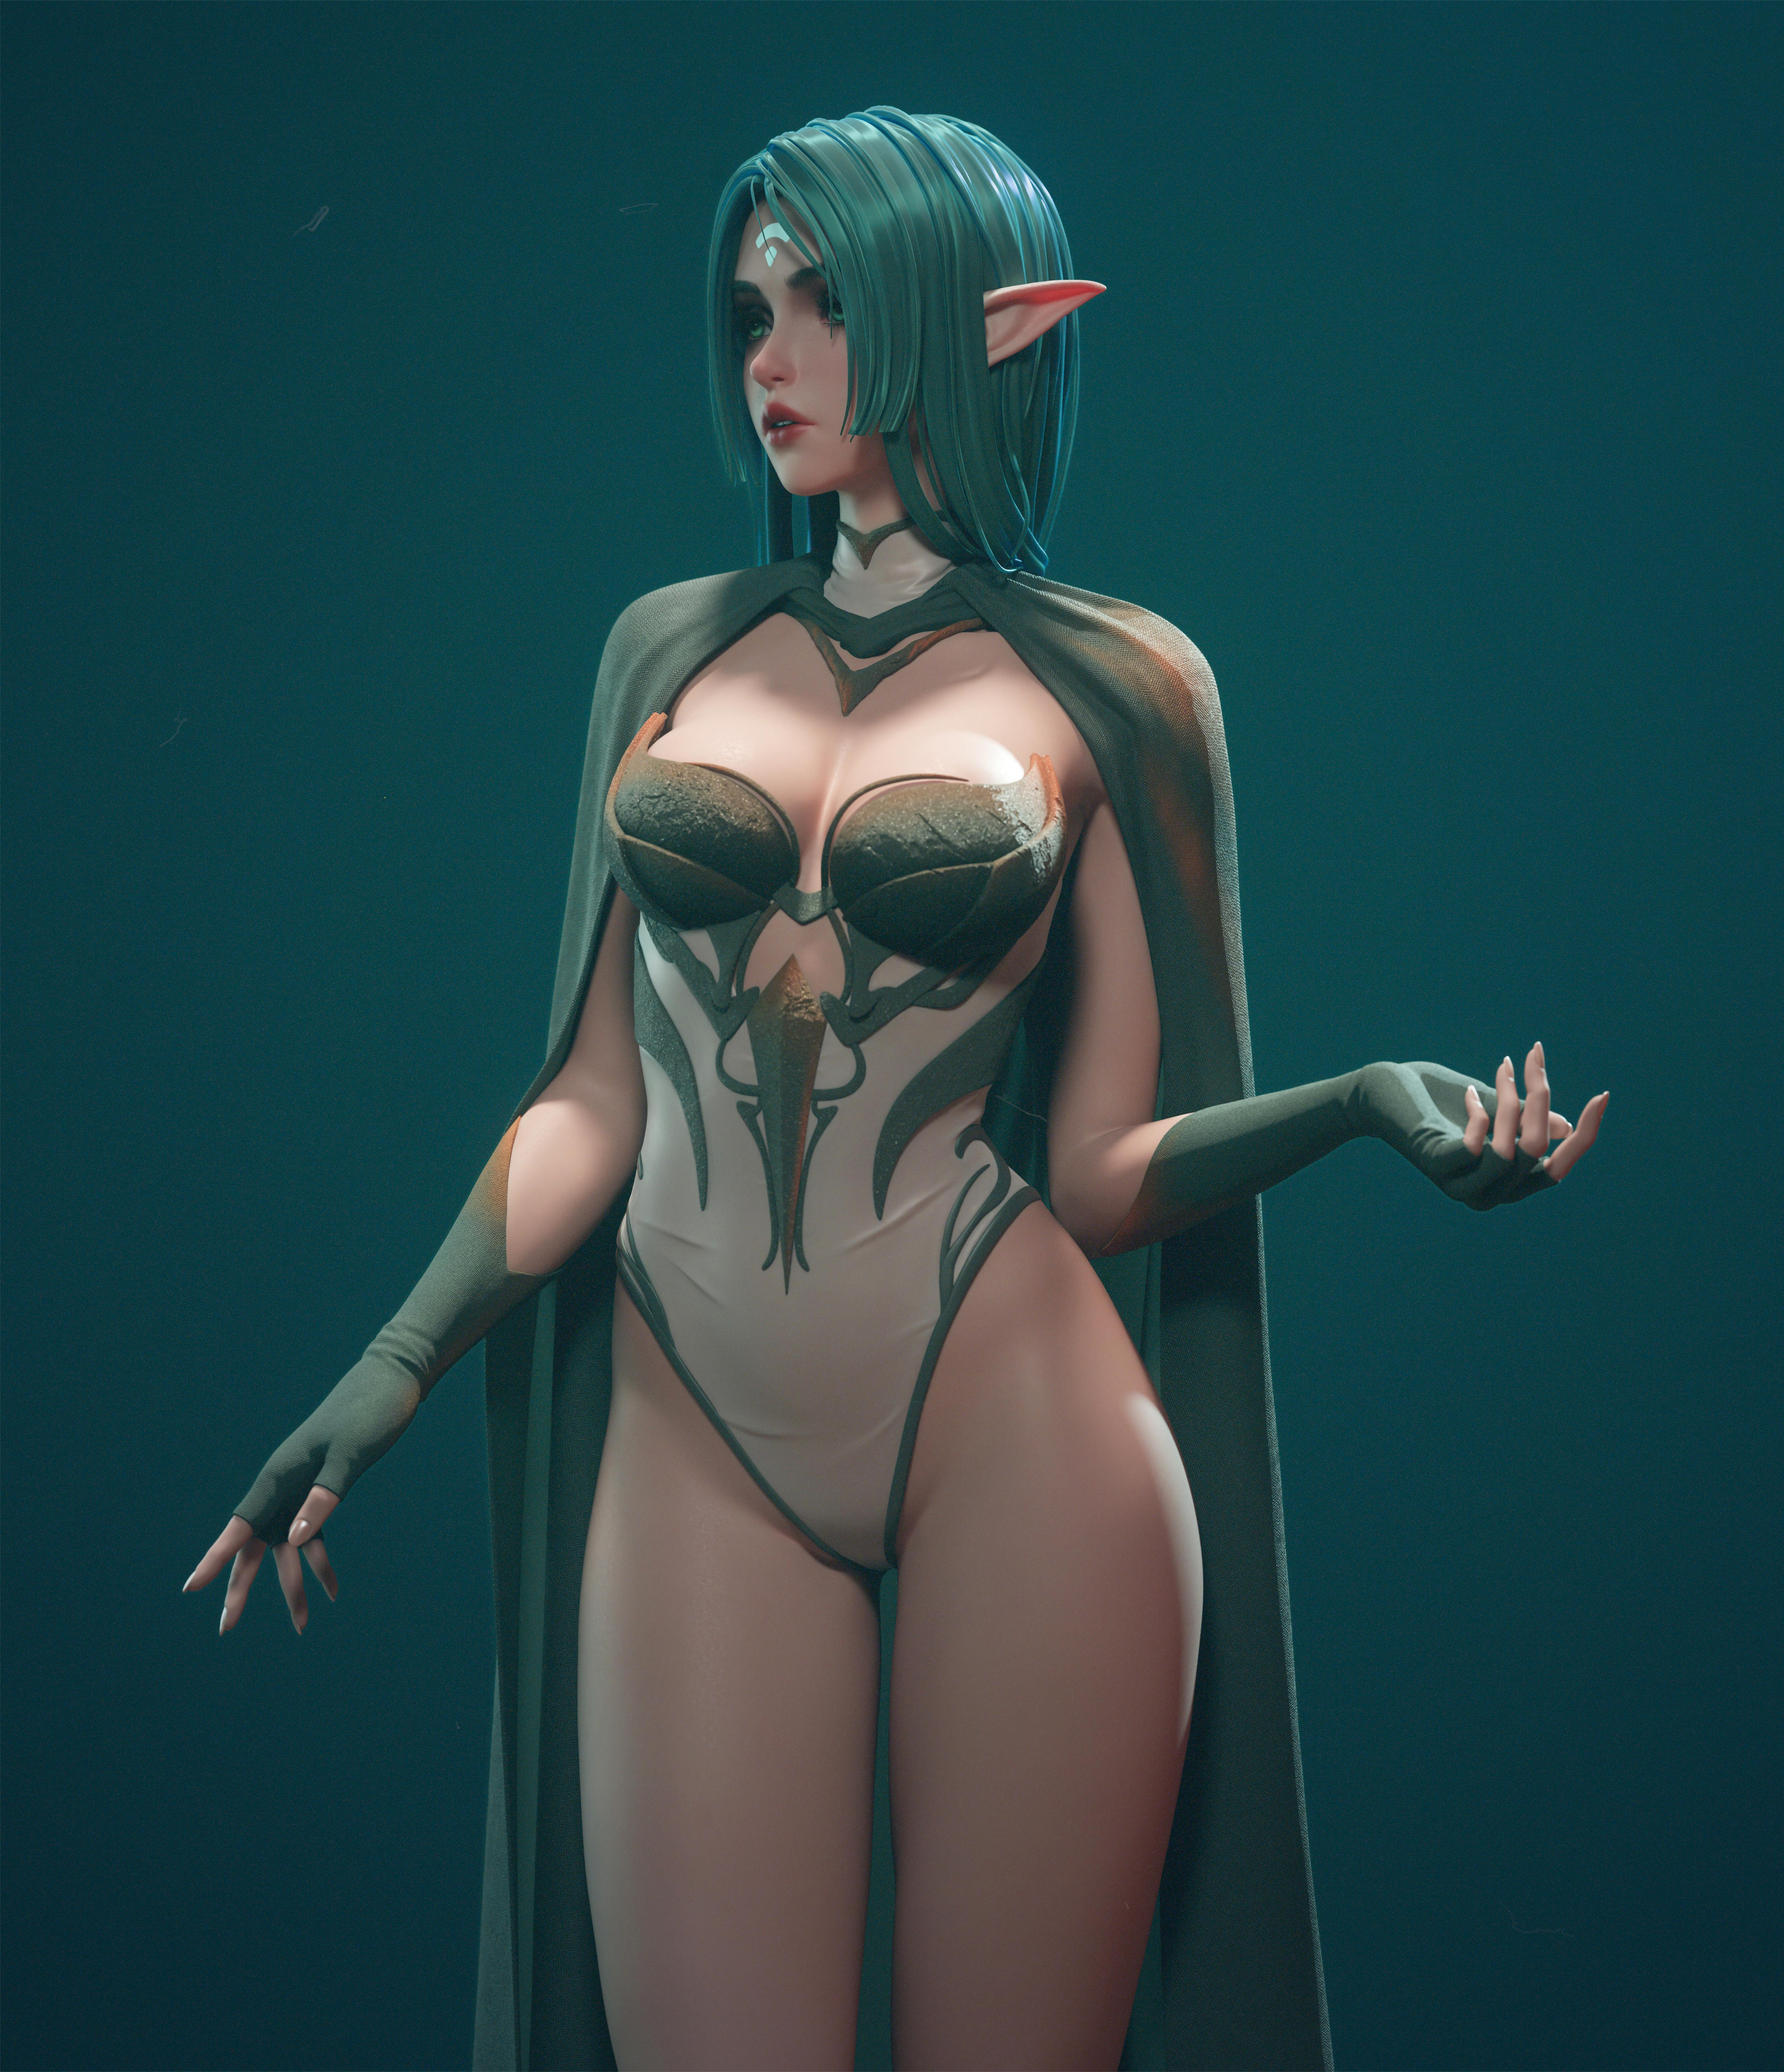 General 3840x4461 Cifangyi CGI elves green hair cape bodysuit simple background women pointy ears fantasy girl